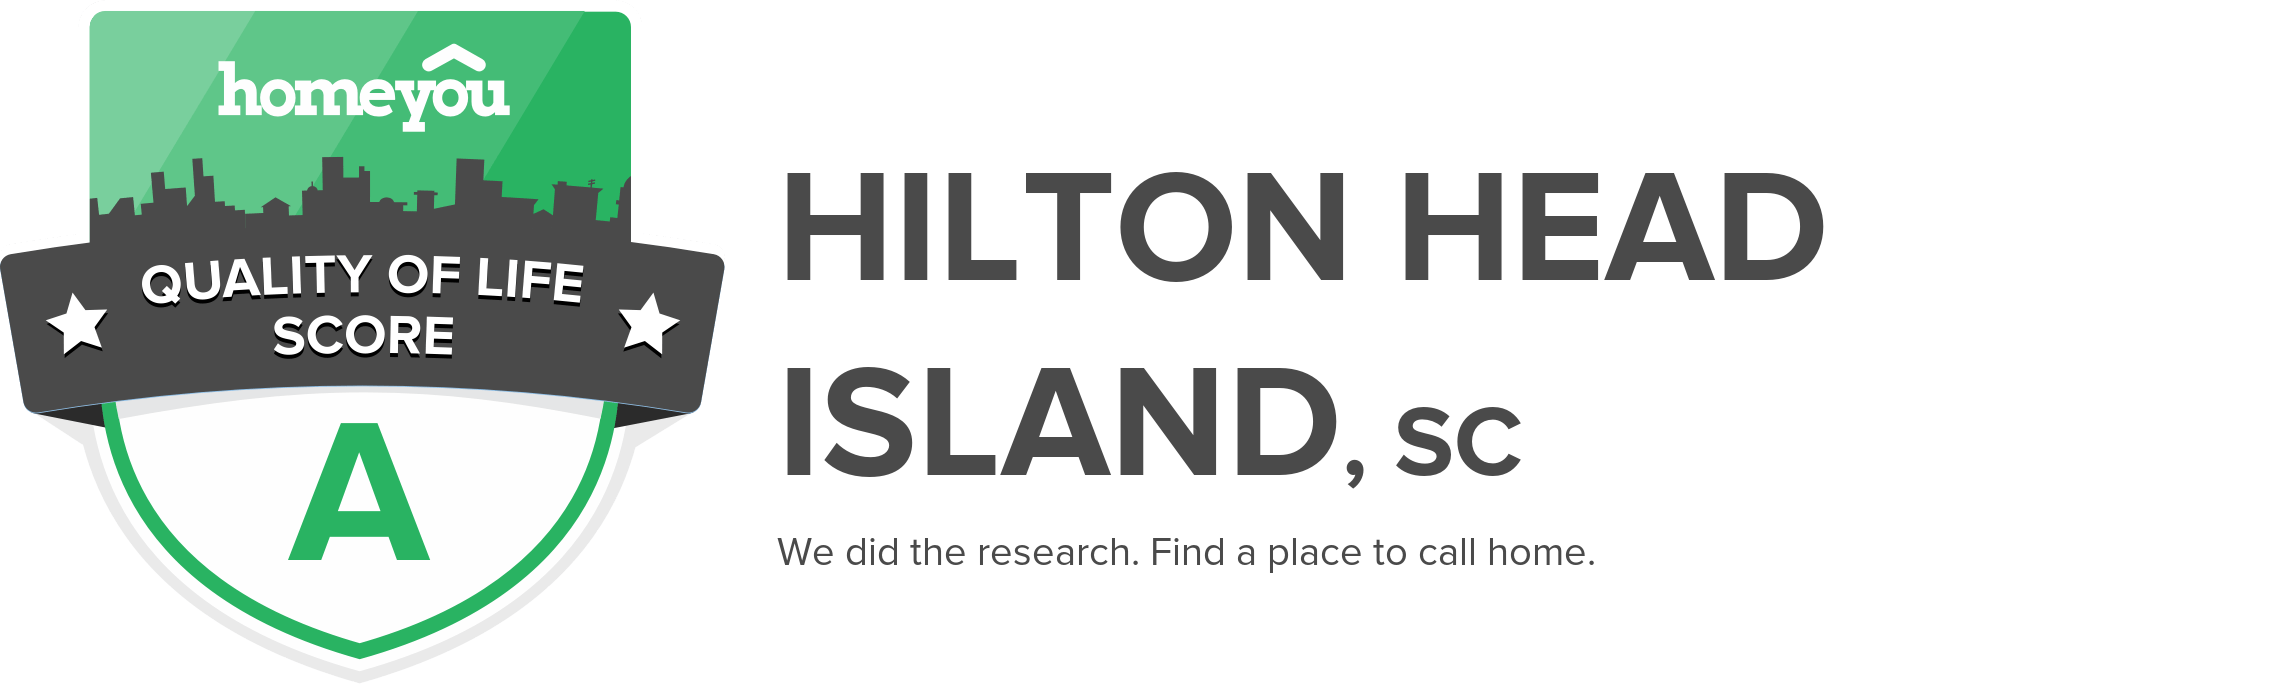 Hilton Head Island, SC